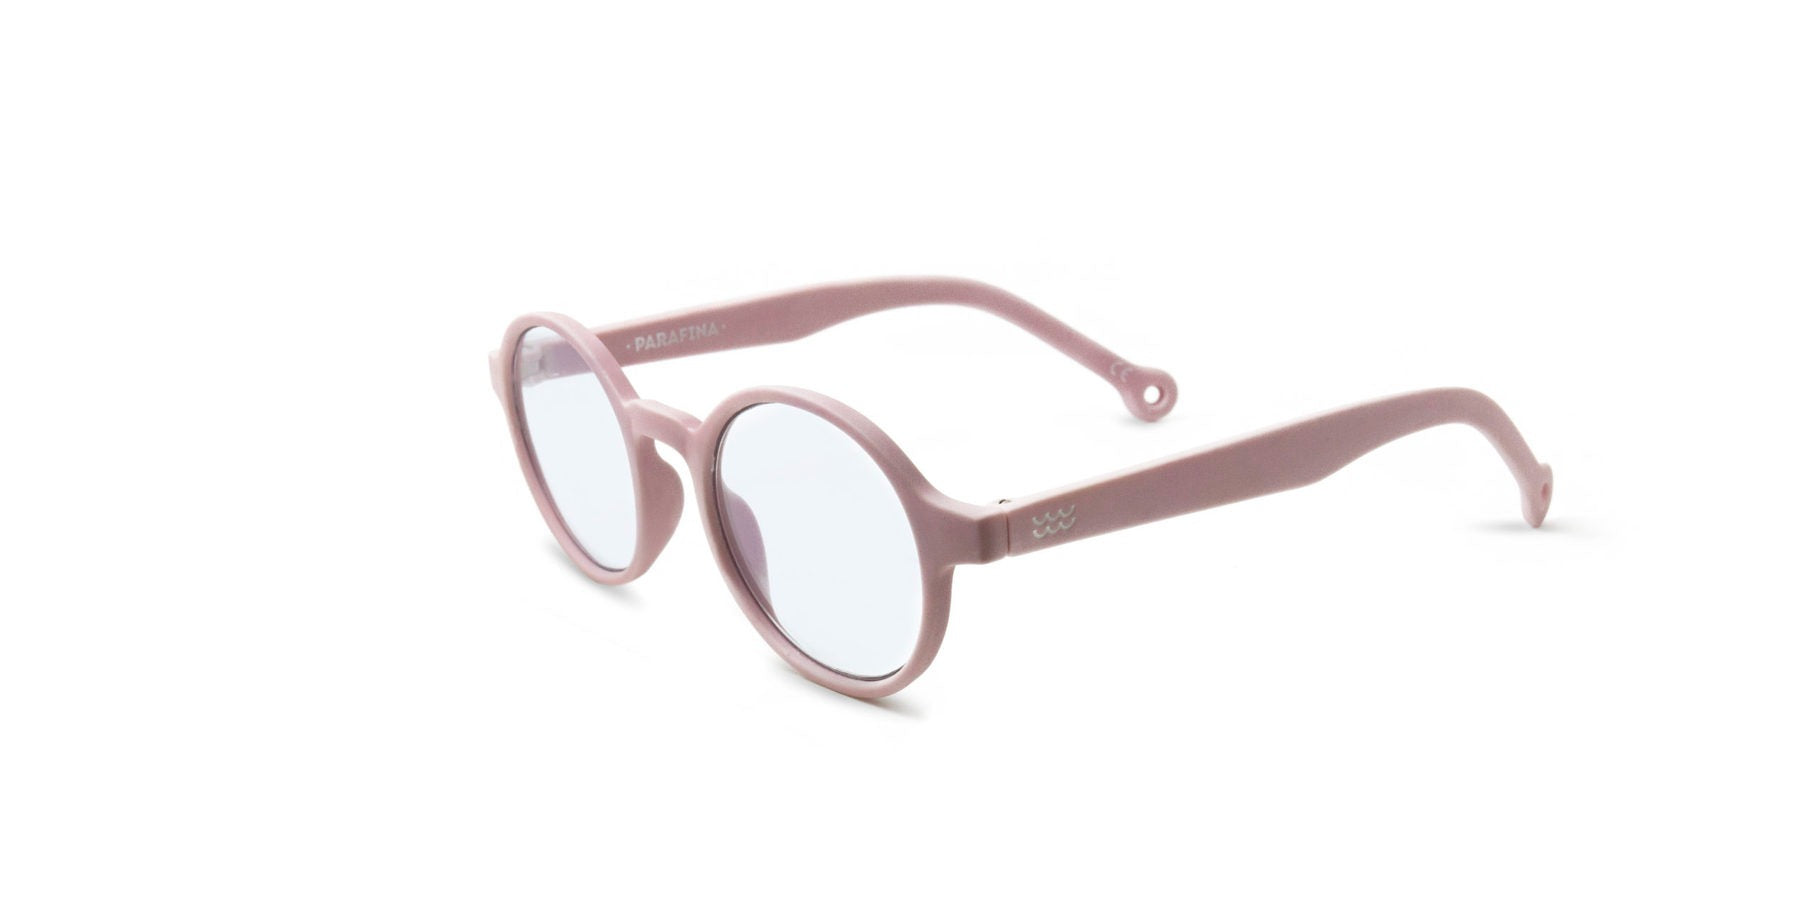 Parafina Screen/Reading Glasses - JUCAR Pink